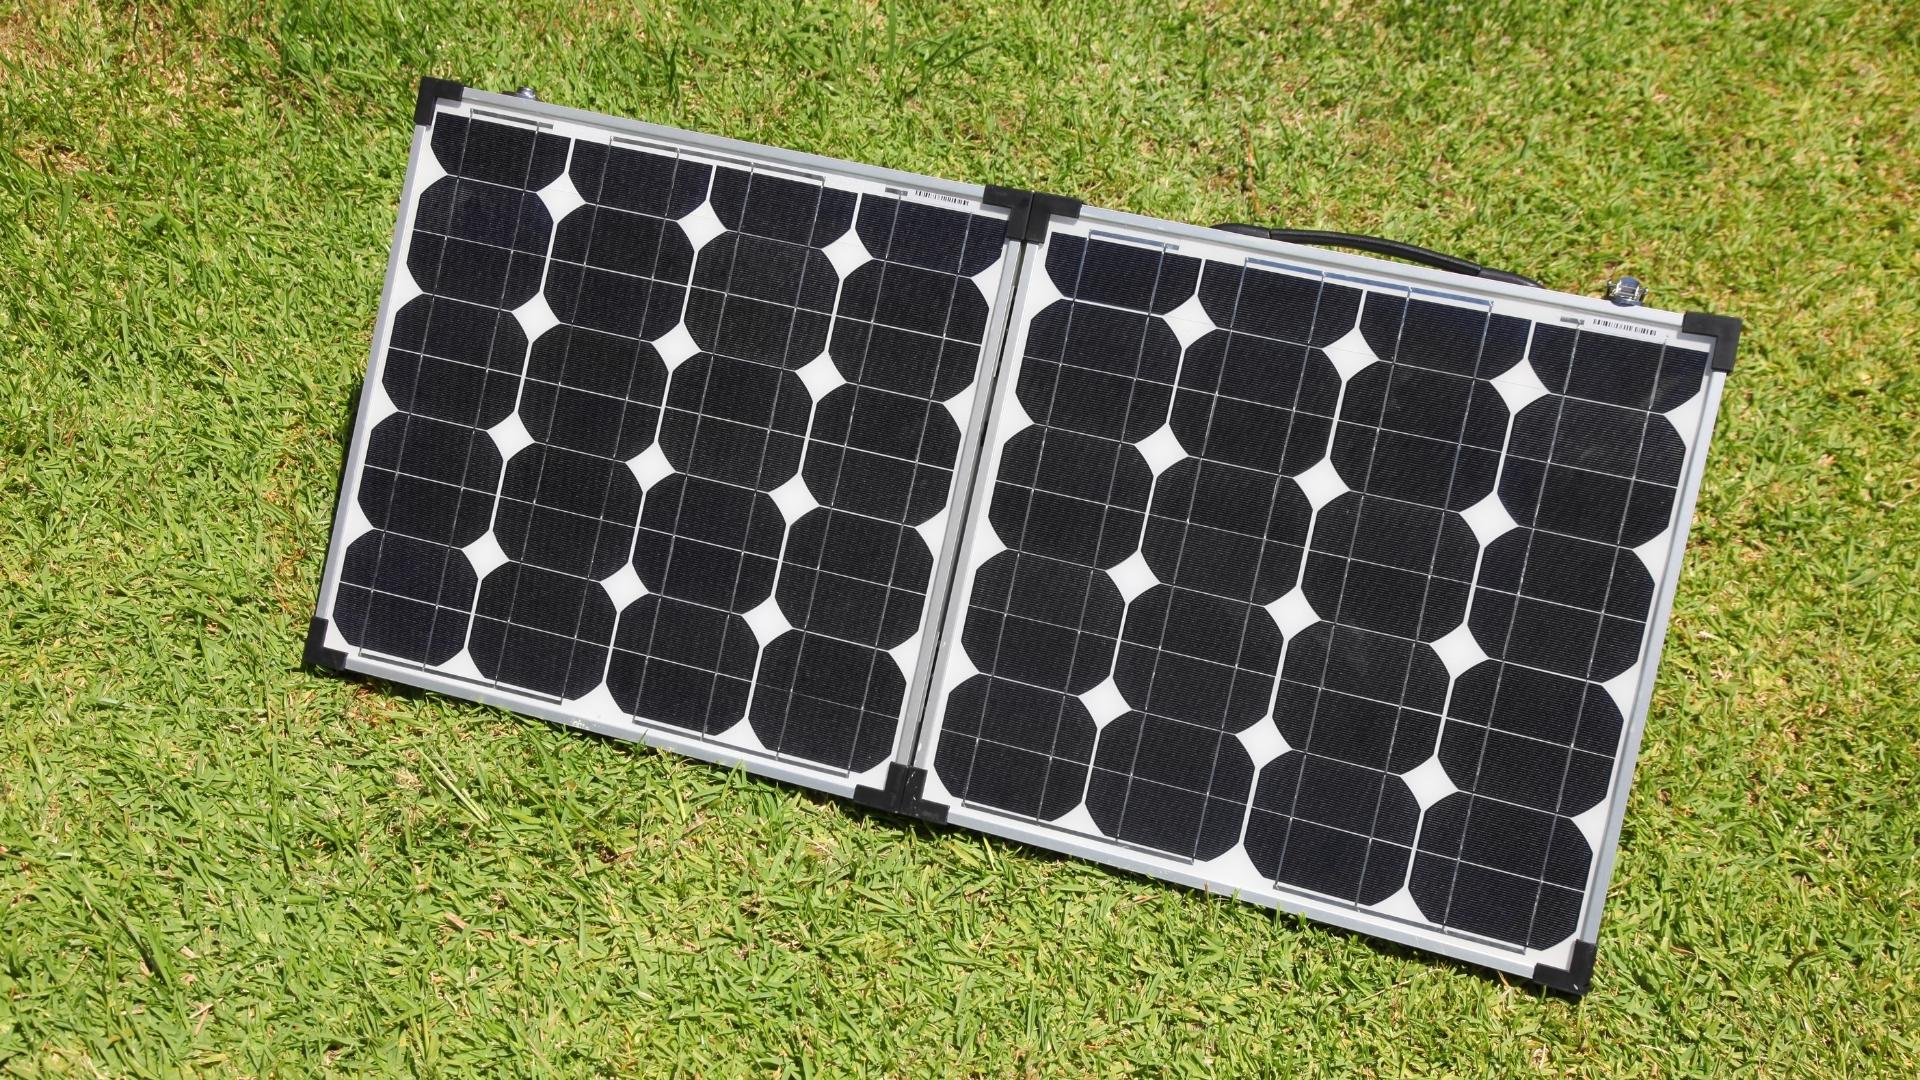 Photo of portable solar panels on the grass, angled toward the sun